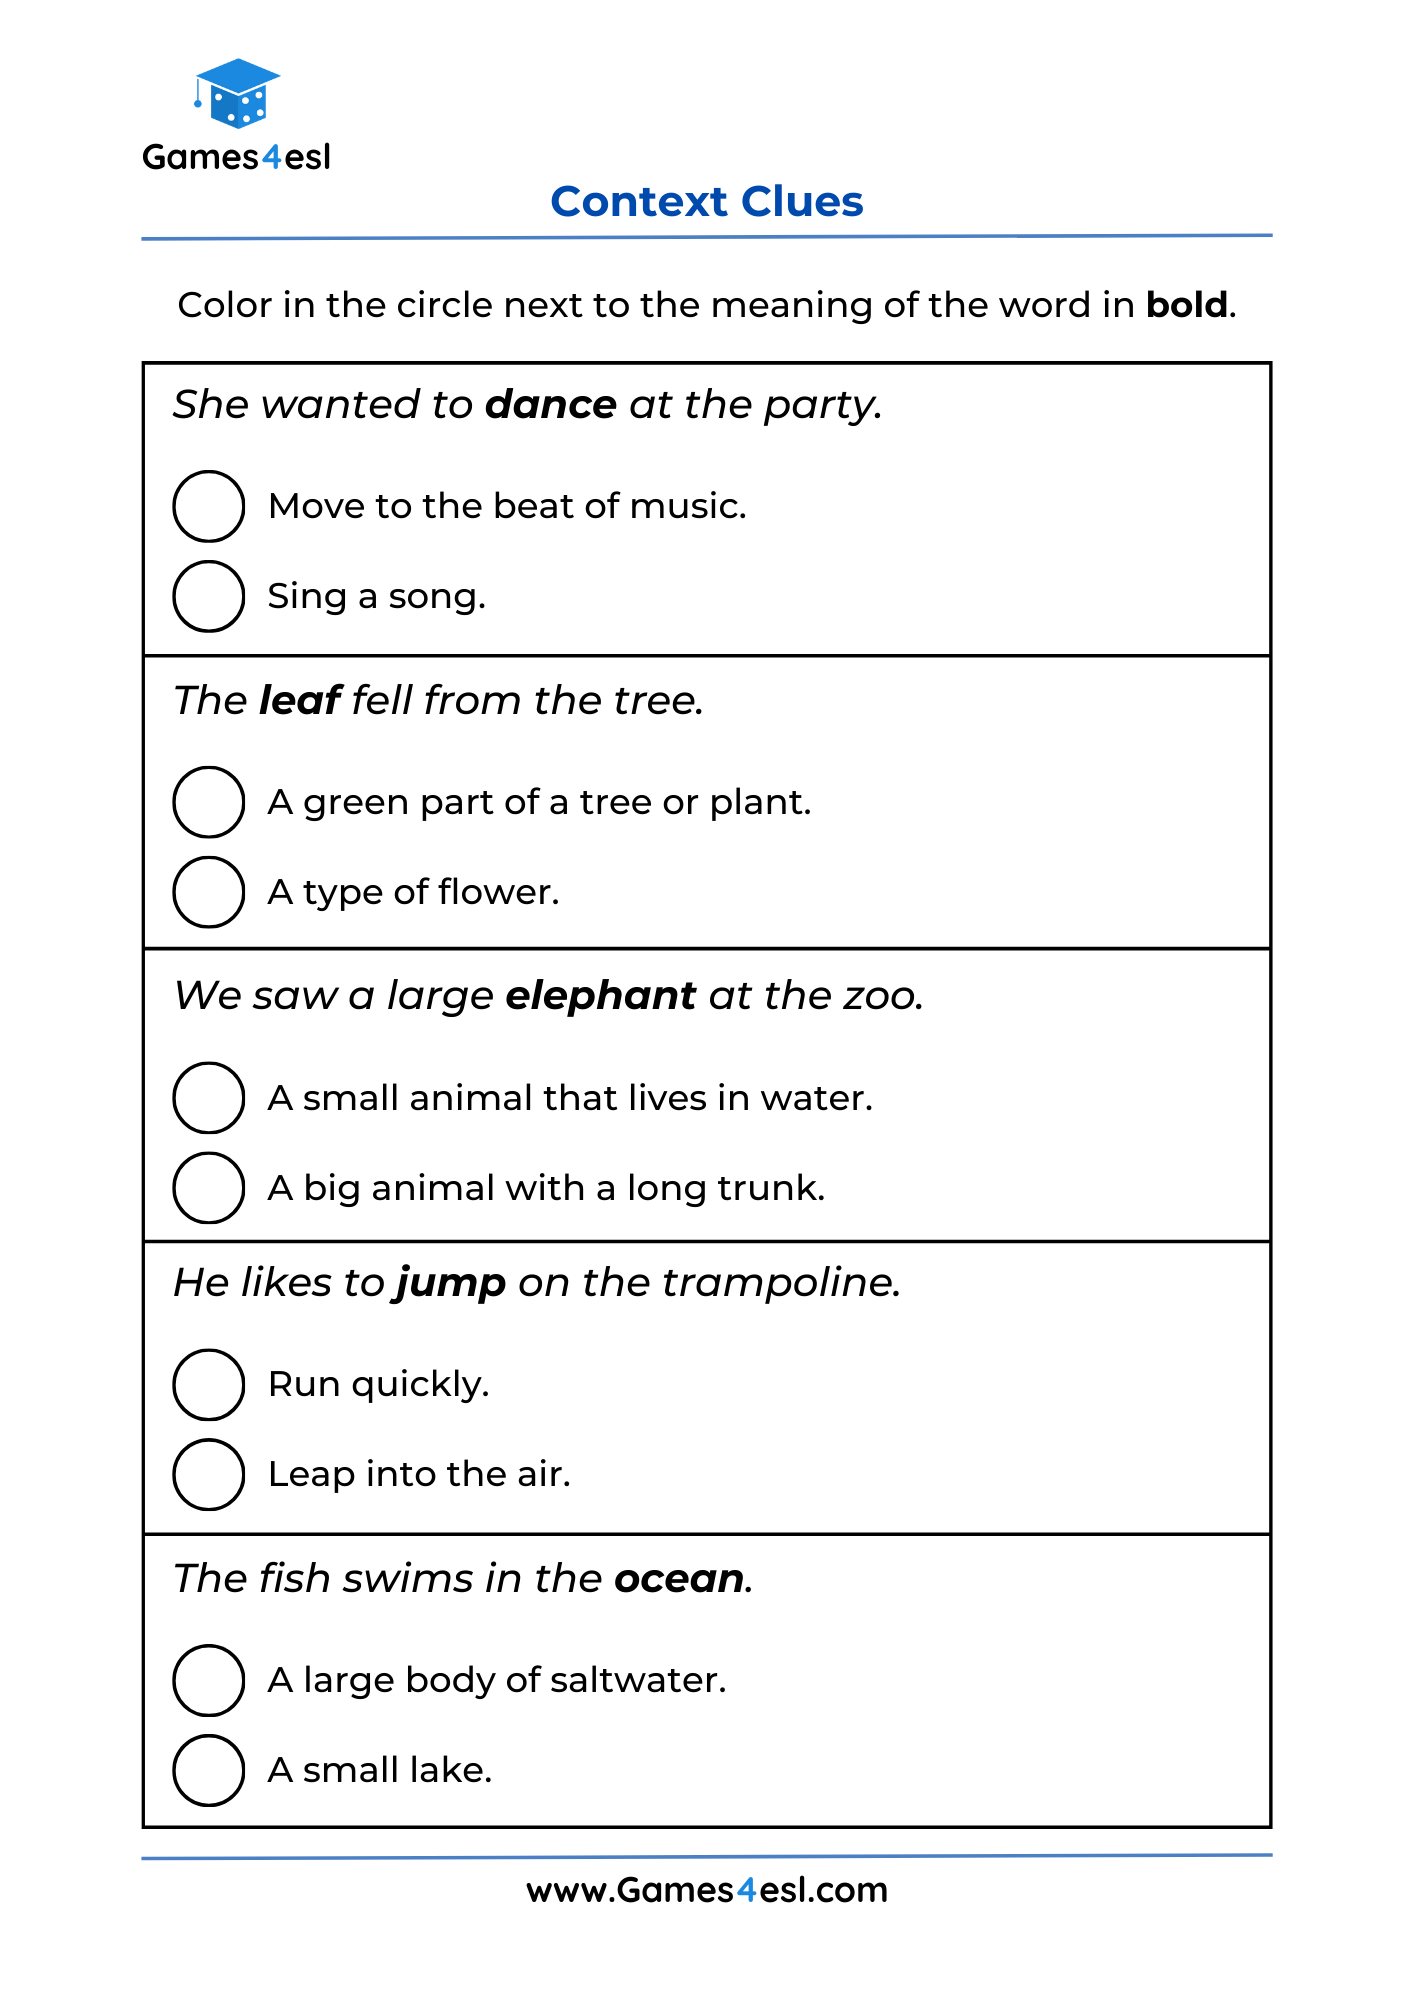 A Context Clues Worksheet for grade 1.